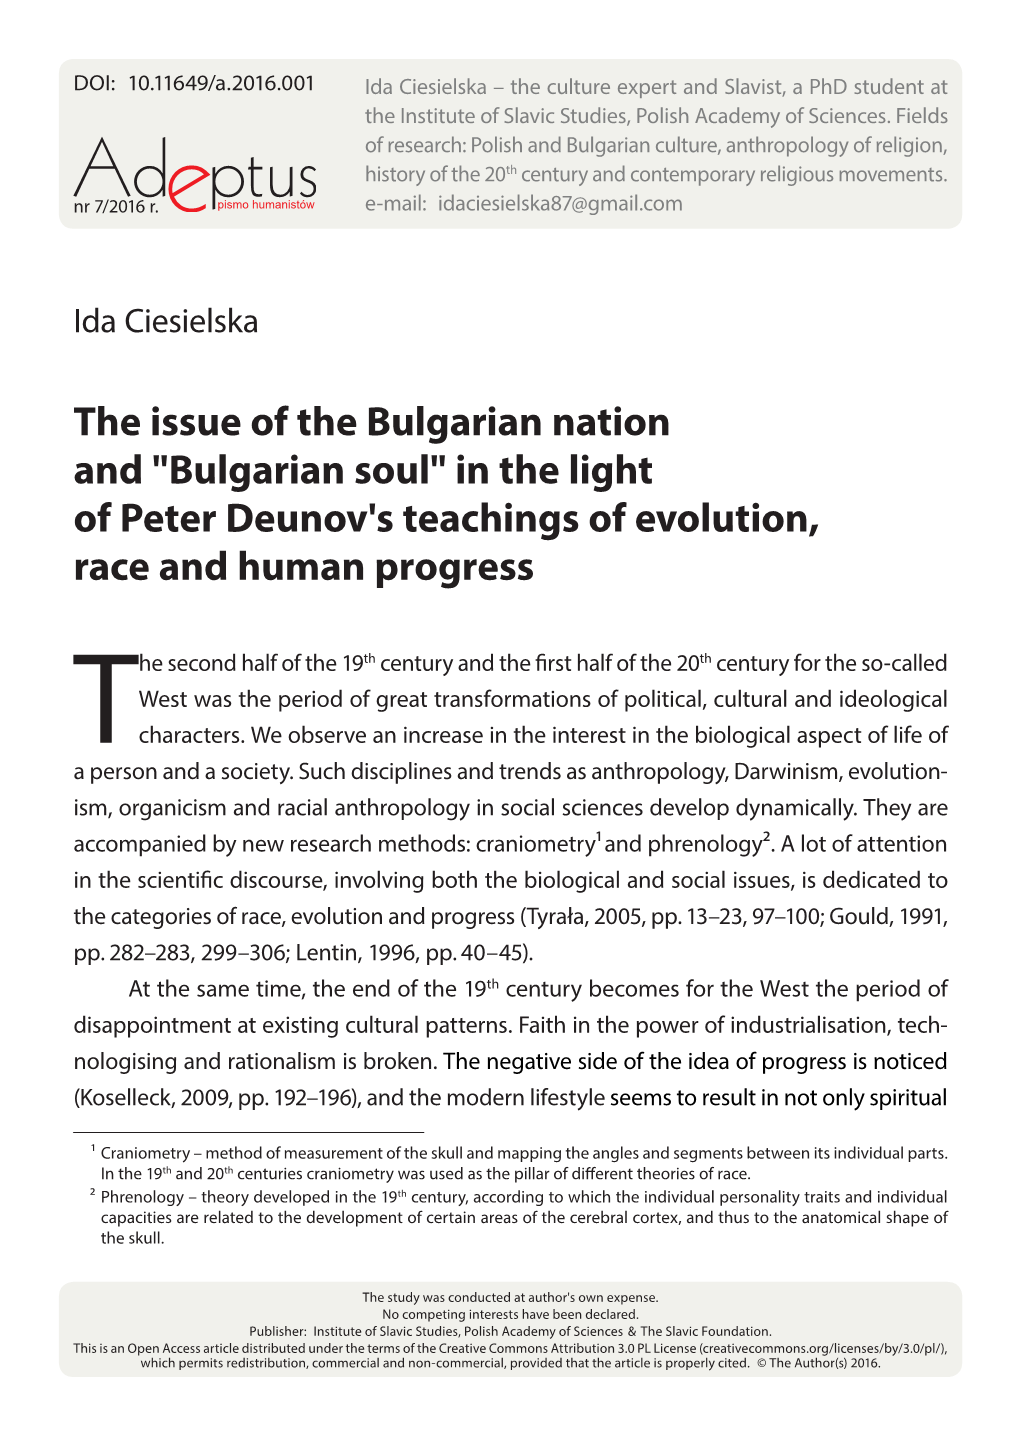 "Bulgarian Soul" in the Light of Peter Deunov's Teachings of Evolution, Race and Human Progress